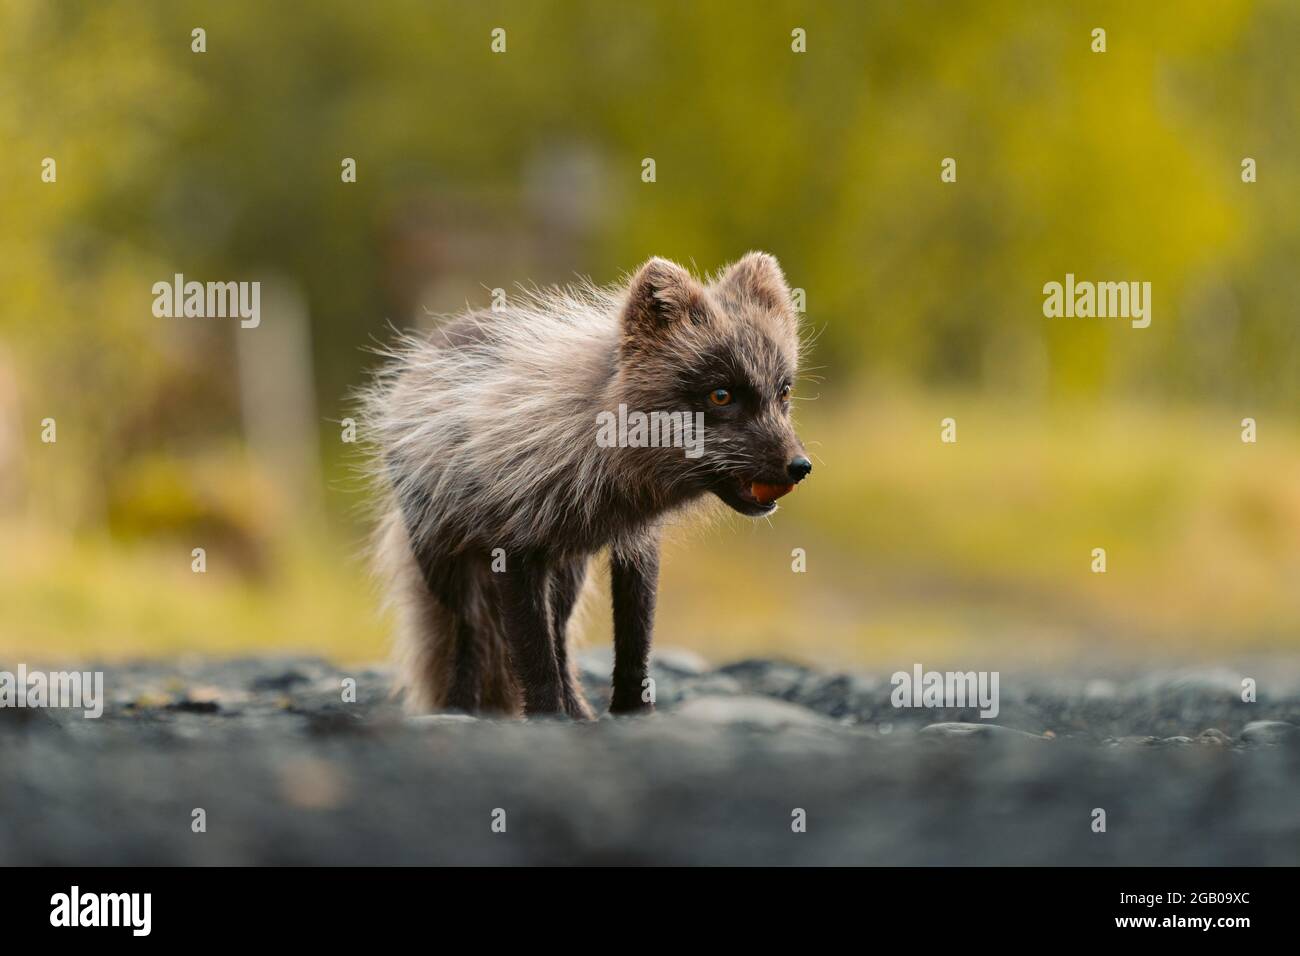 Arctic fox in Iceland. Portrait photo of an arctic fox Stock Photo